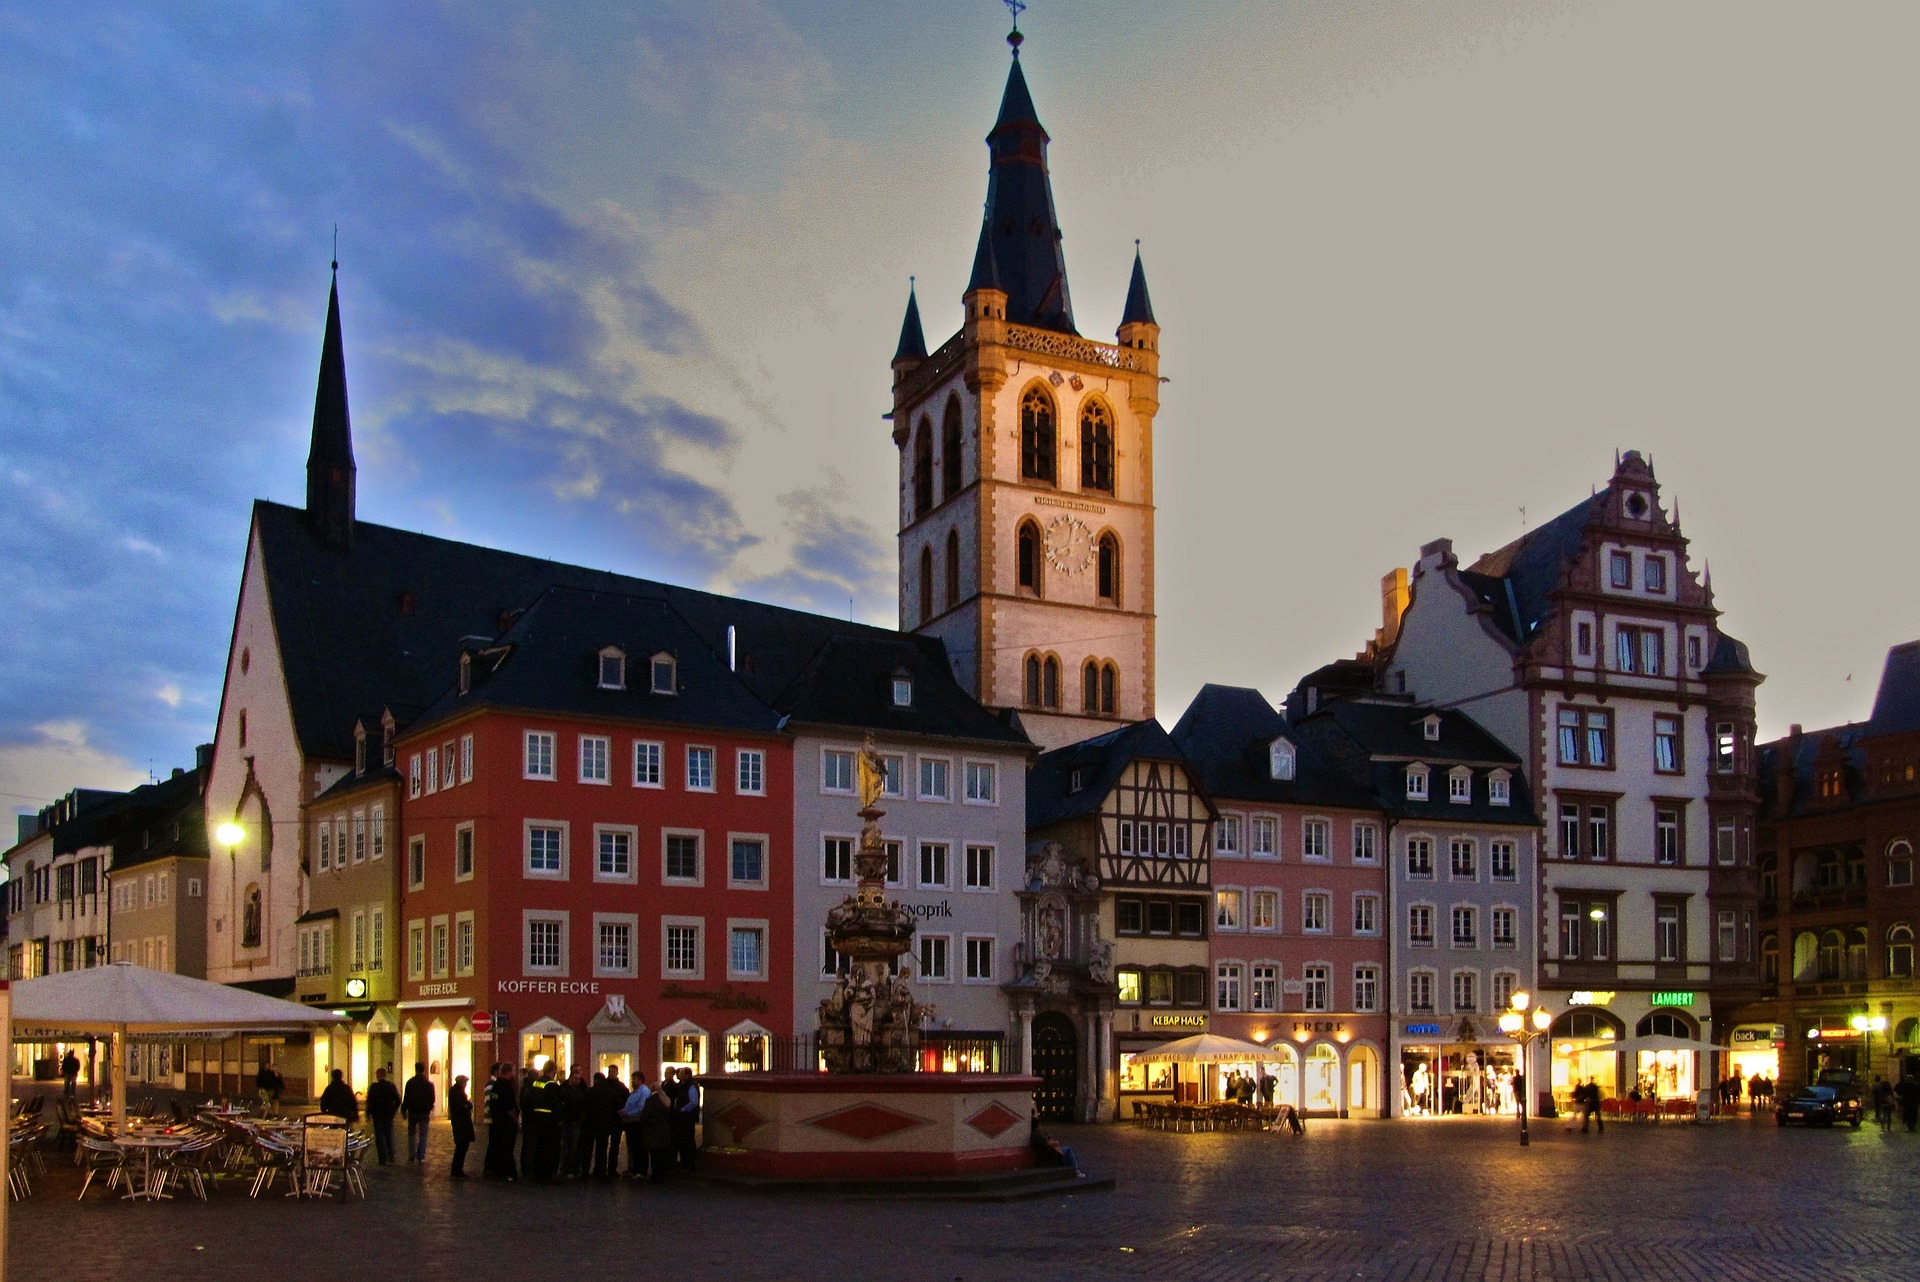 Trier square